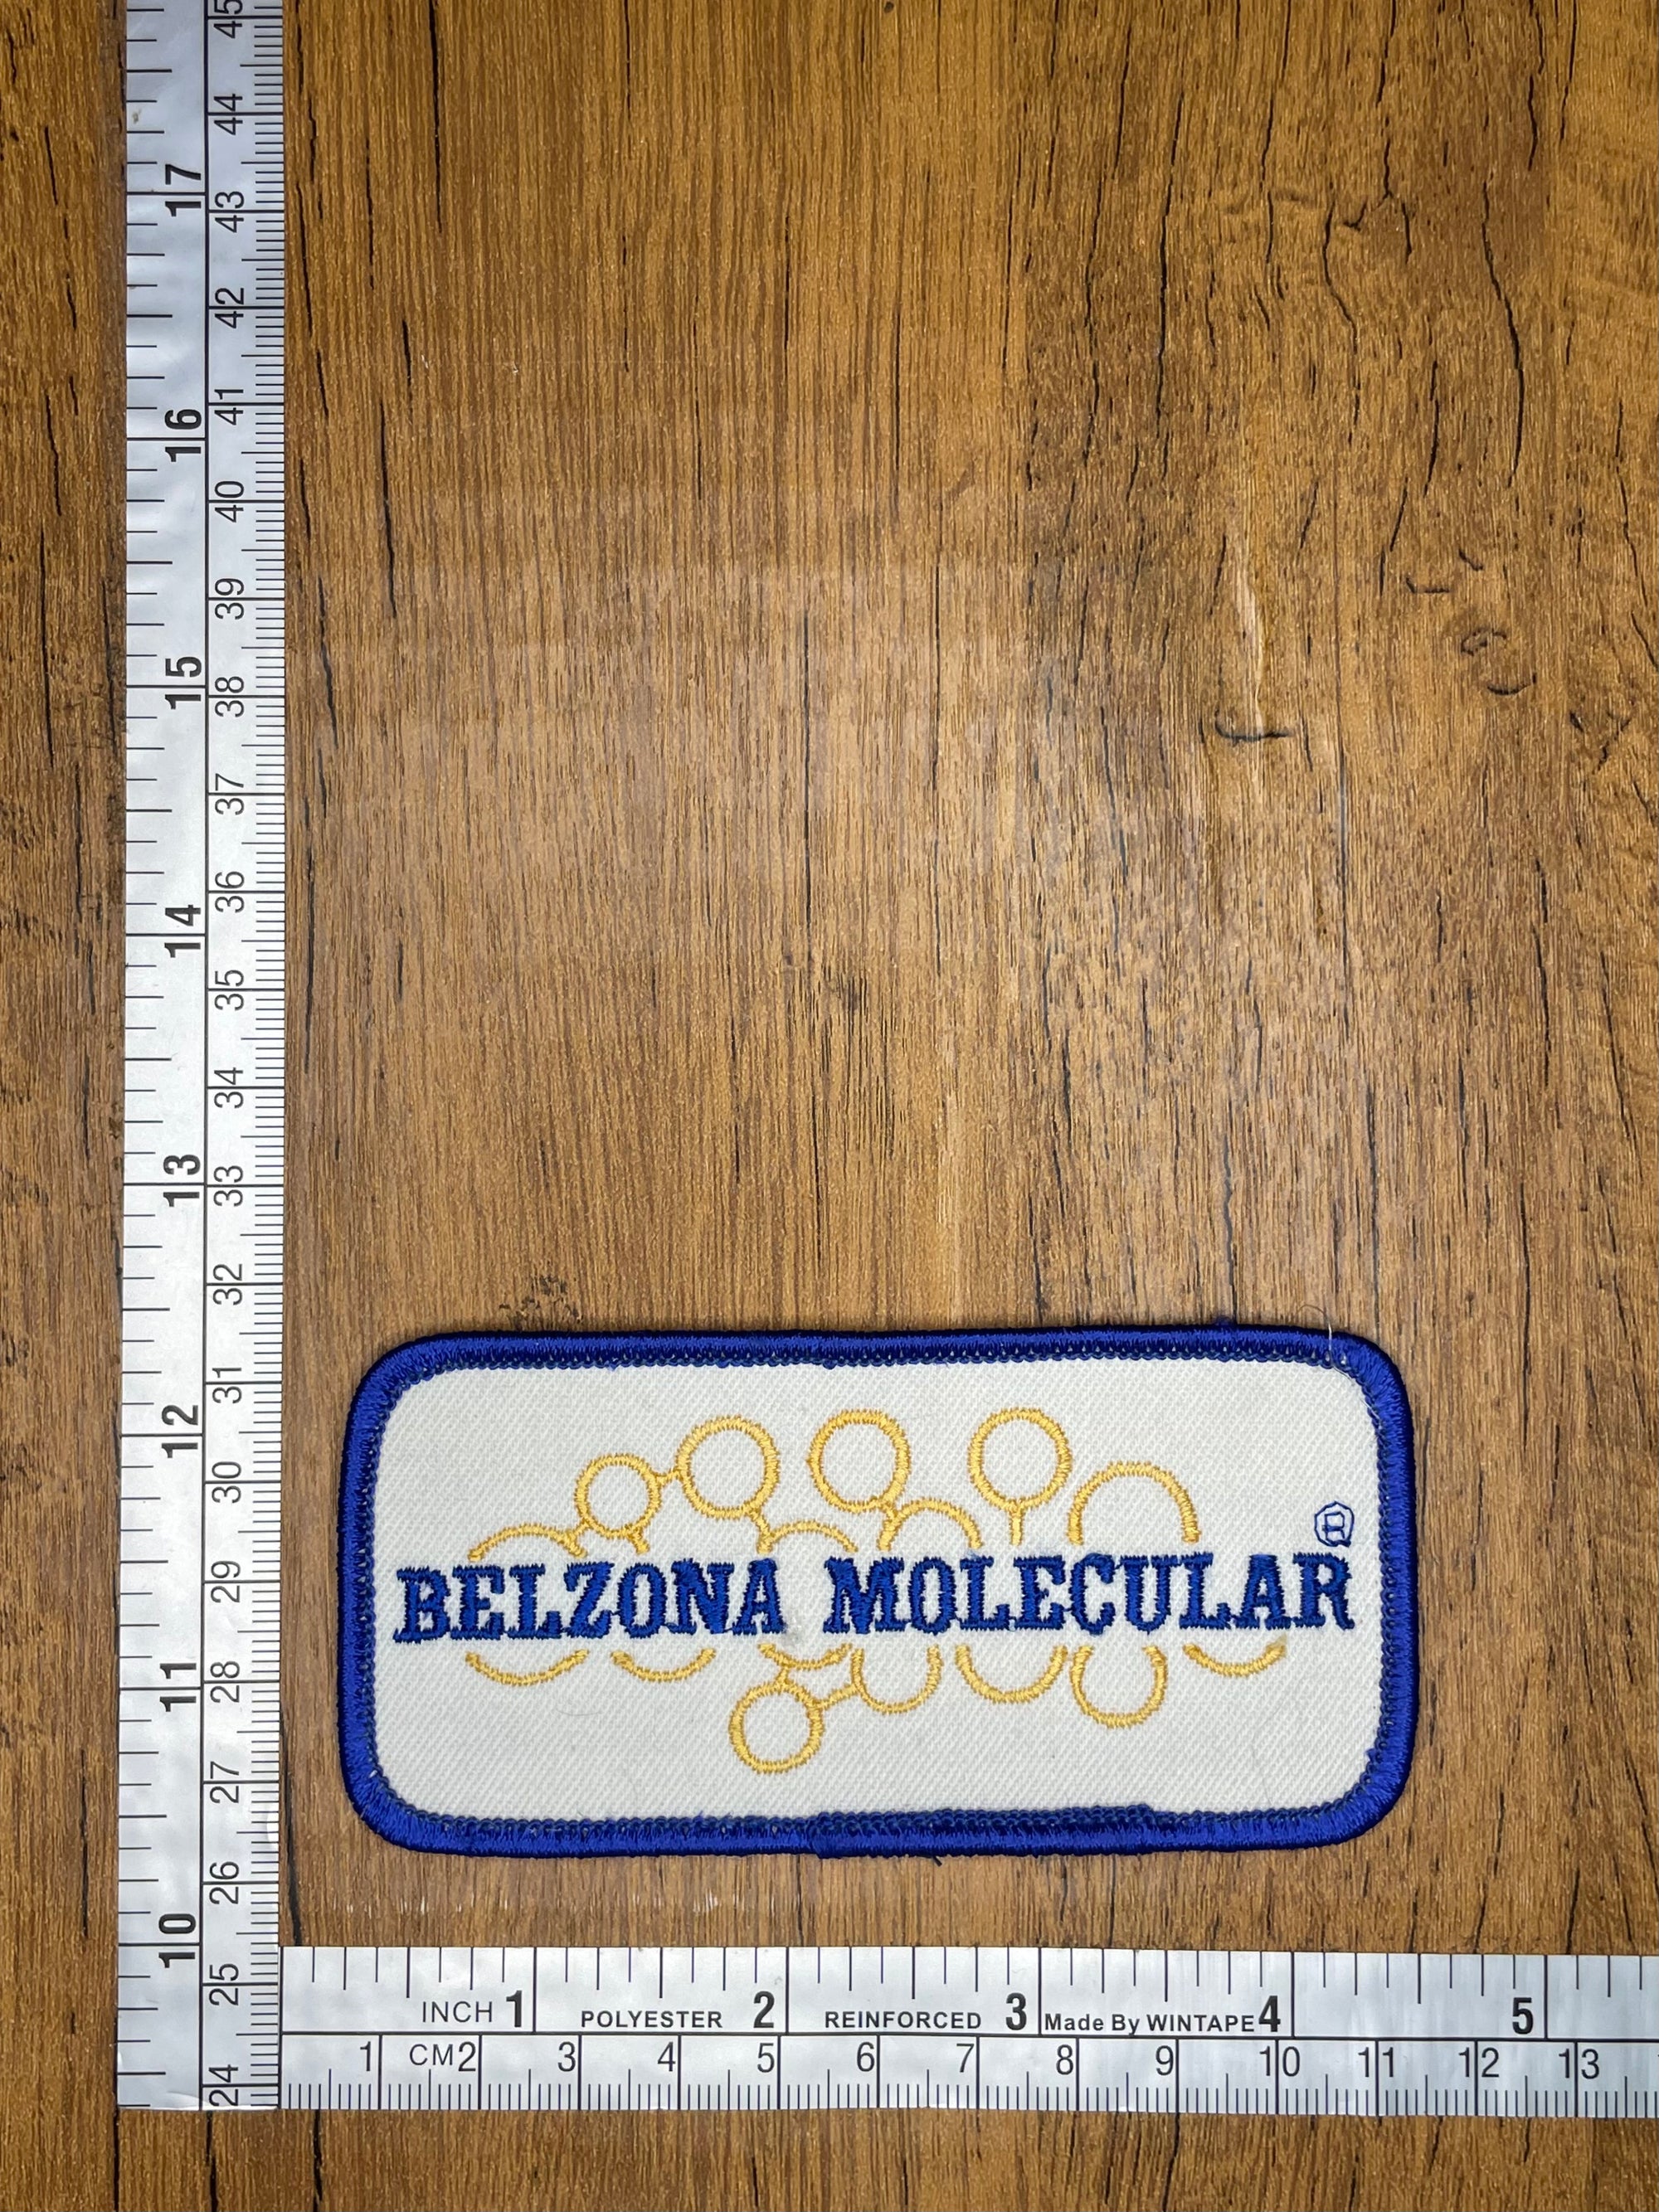 Vintage Belzona Molecular